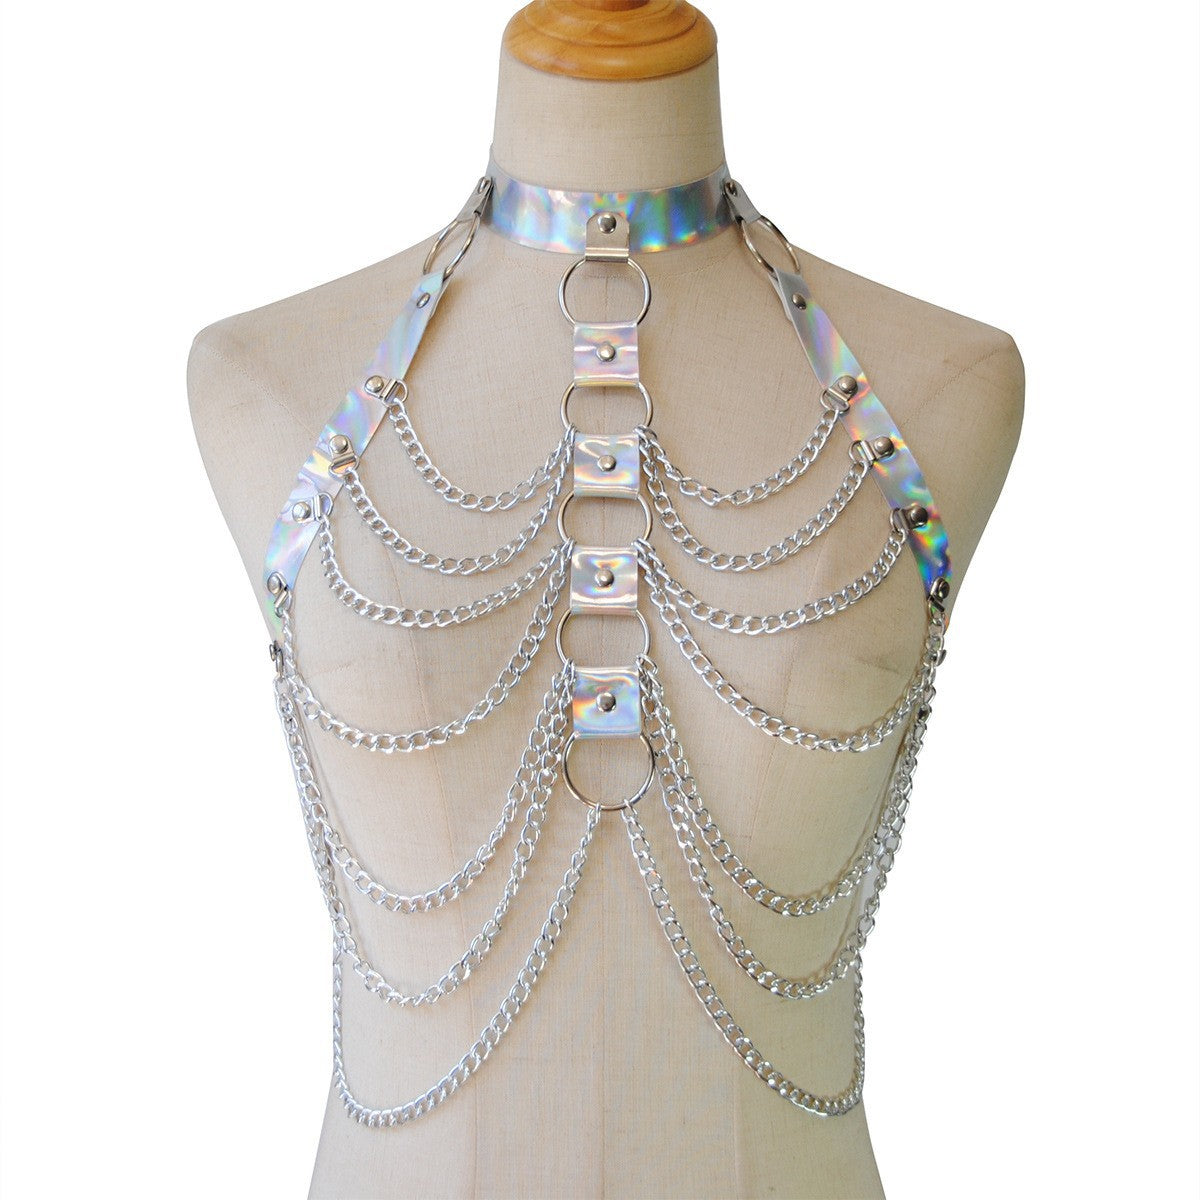 Laser Women's Chest Jewelry Body Chain Set